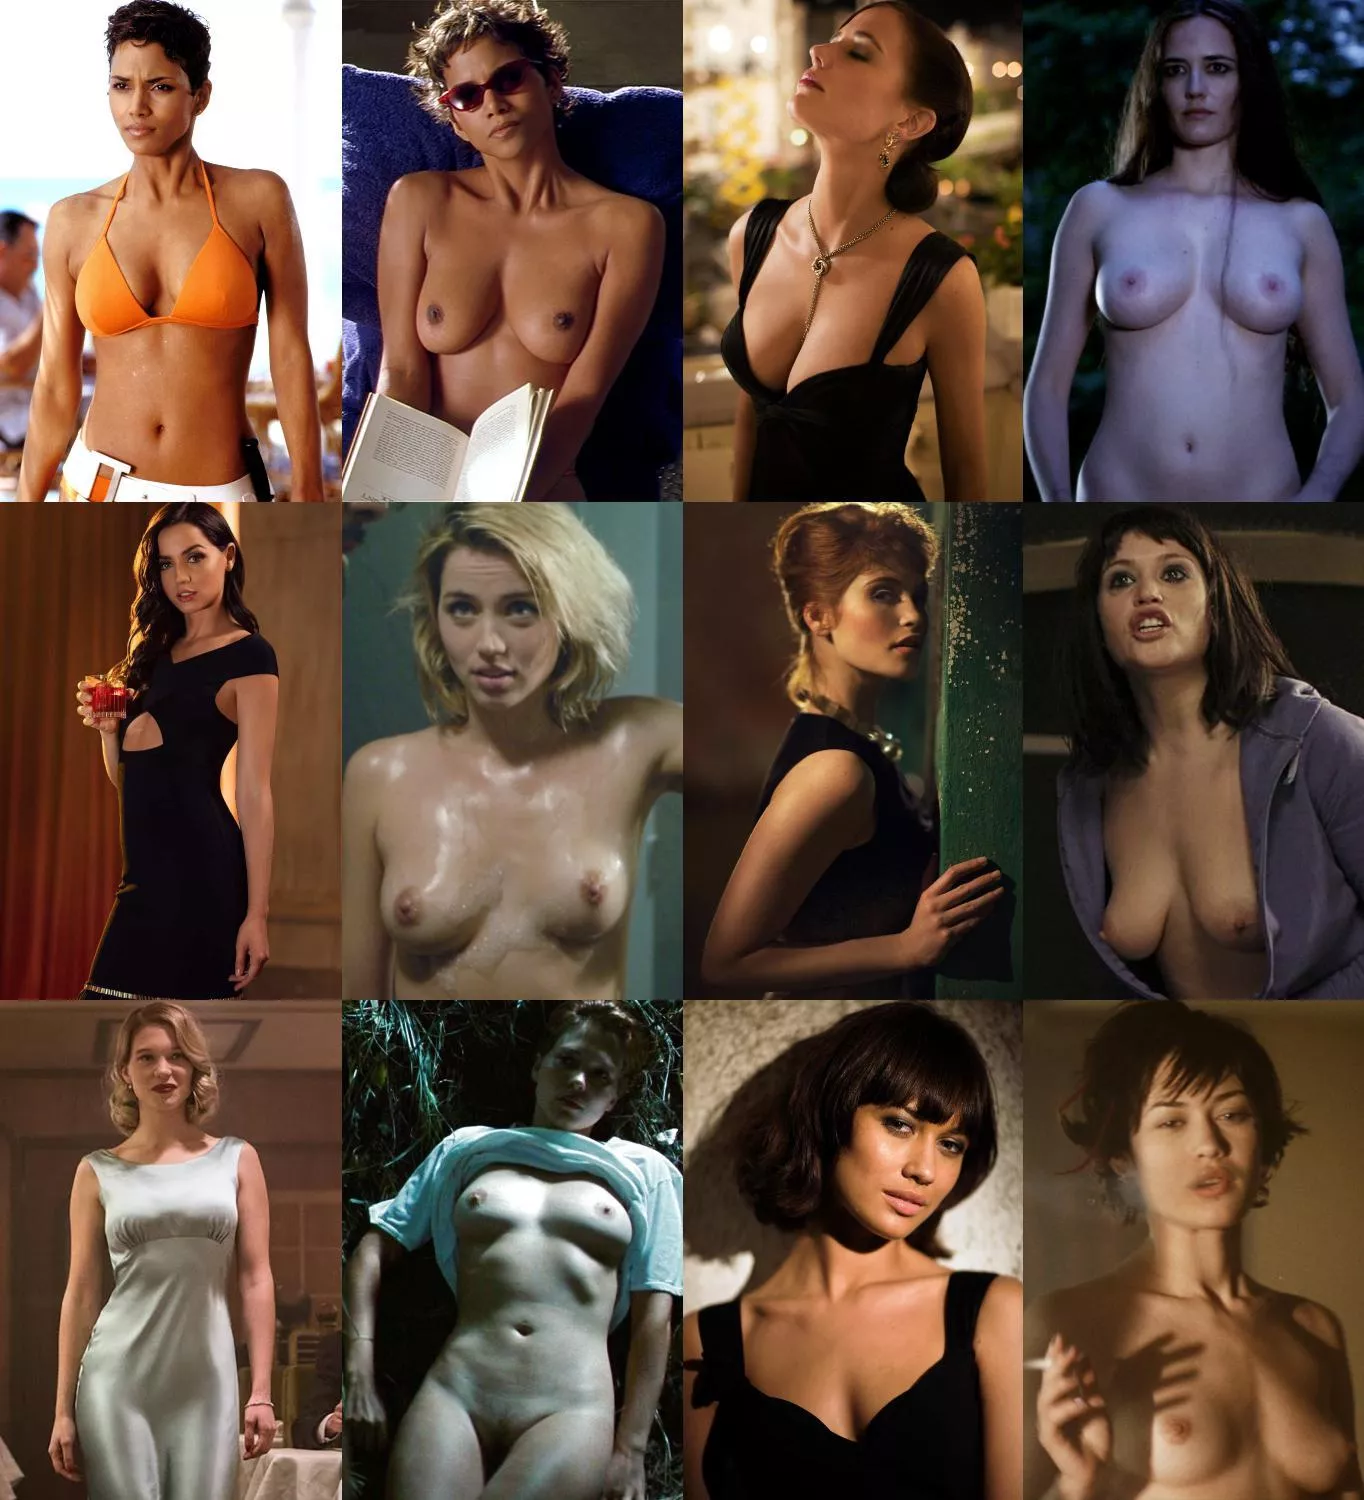 James Bond Girls Nude Pics